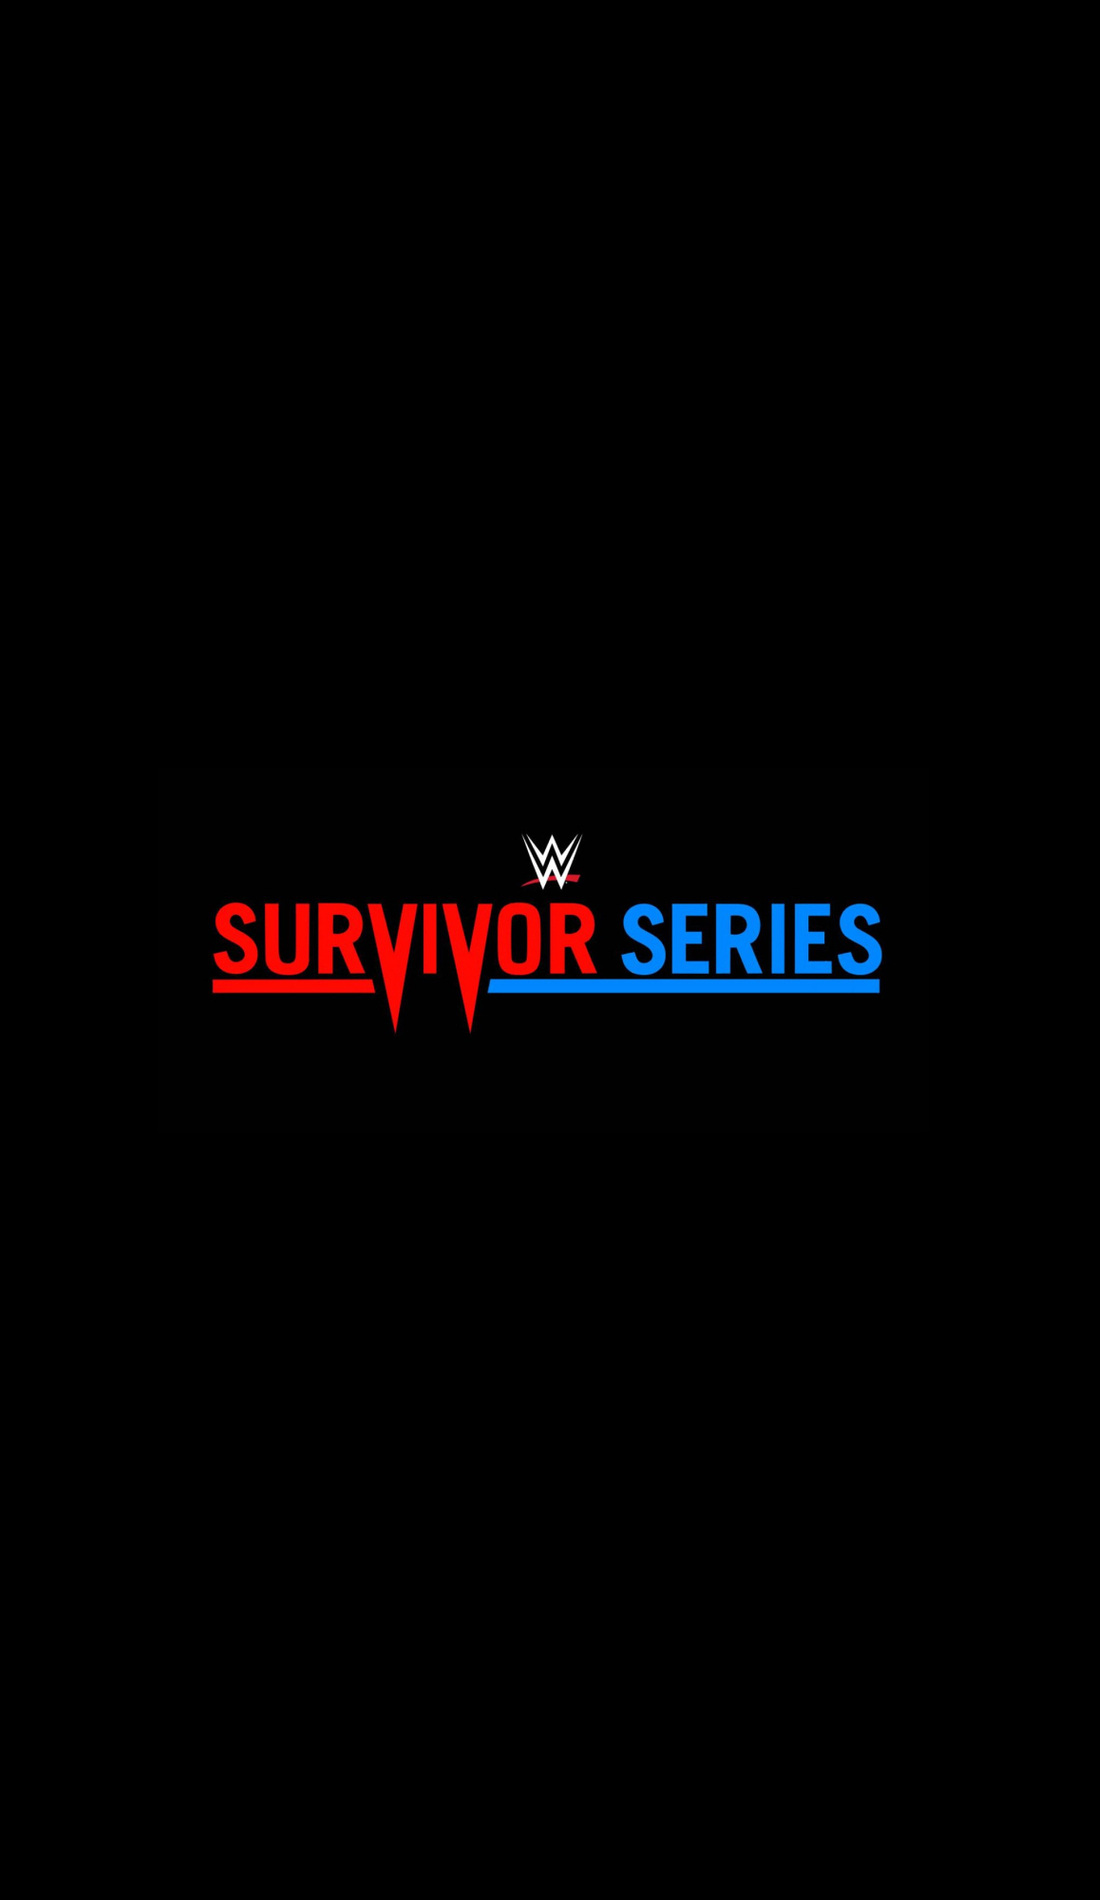 A WWE Survivor Series live event